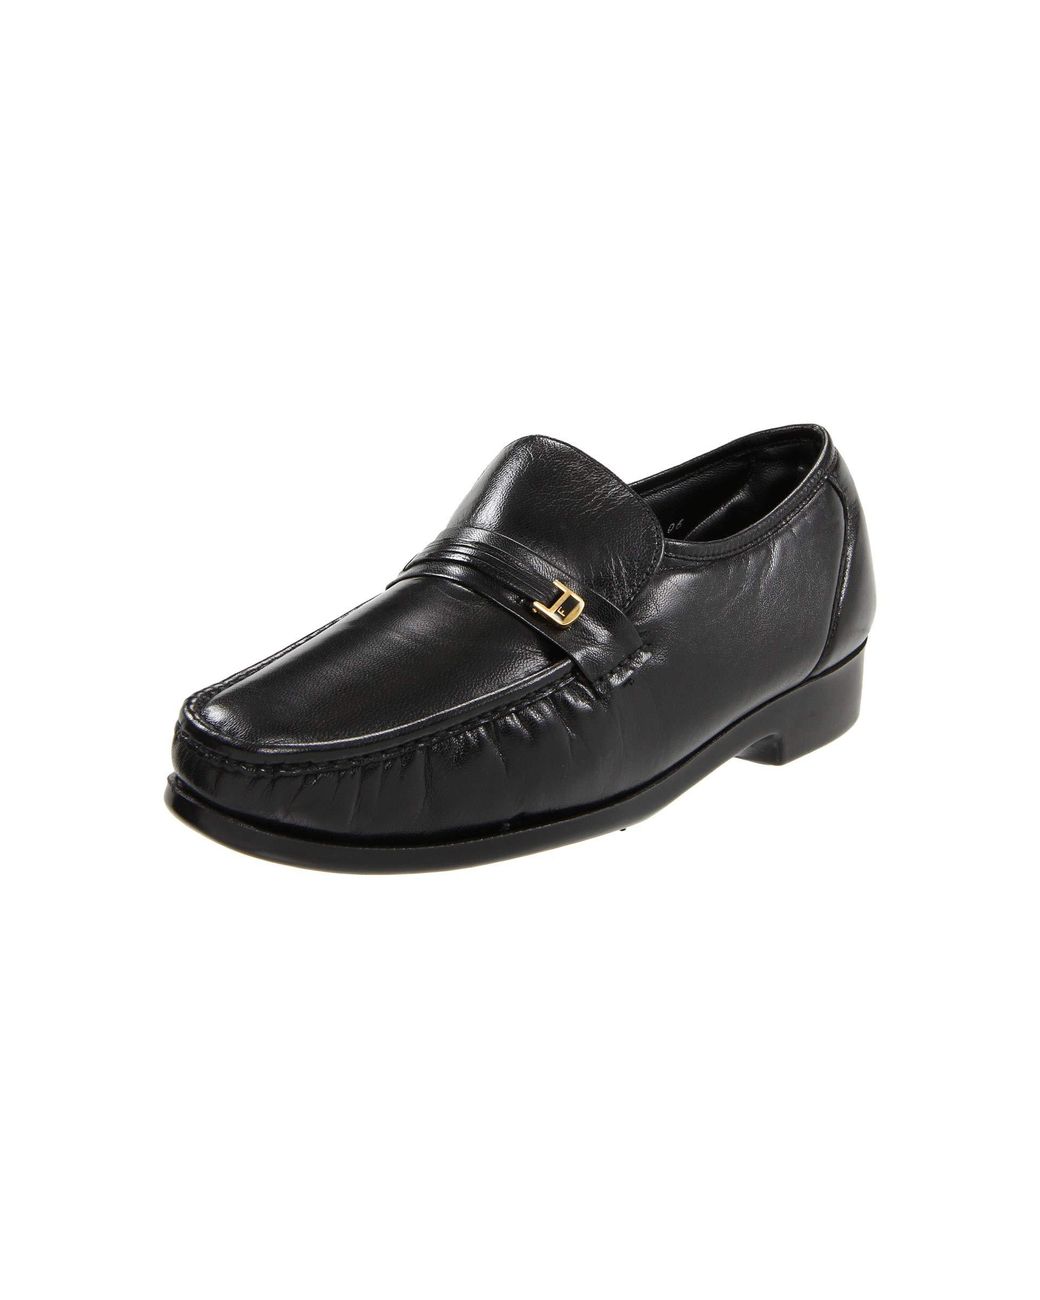 Florsheim Leather Single Shoe - Riva in Black for Men - Lyst